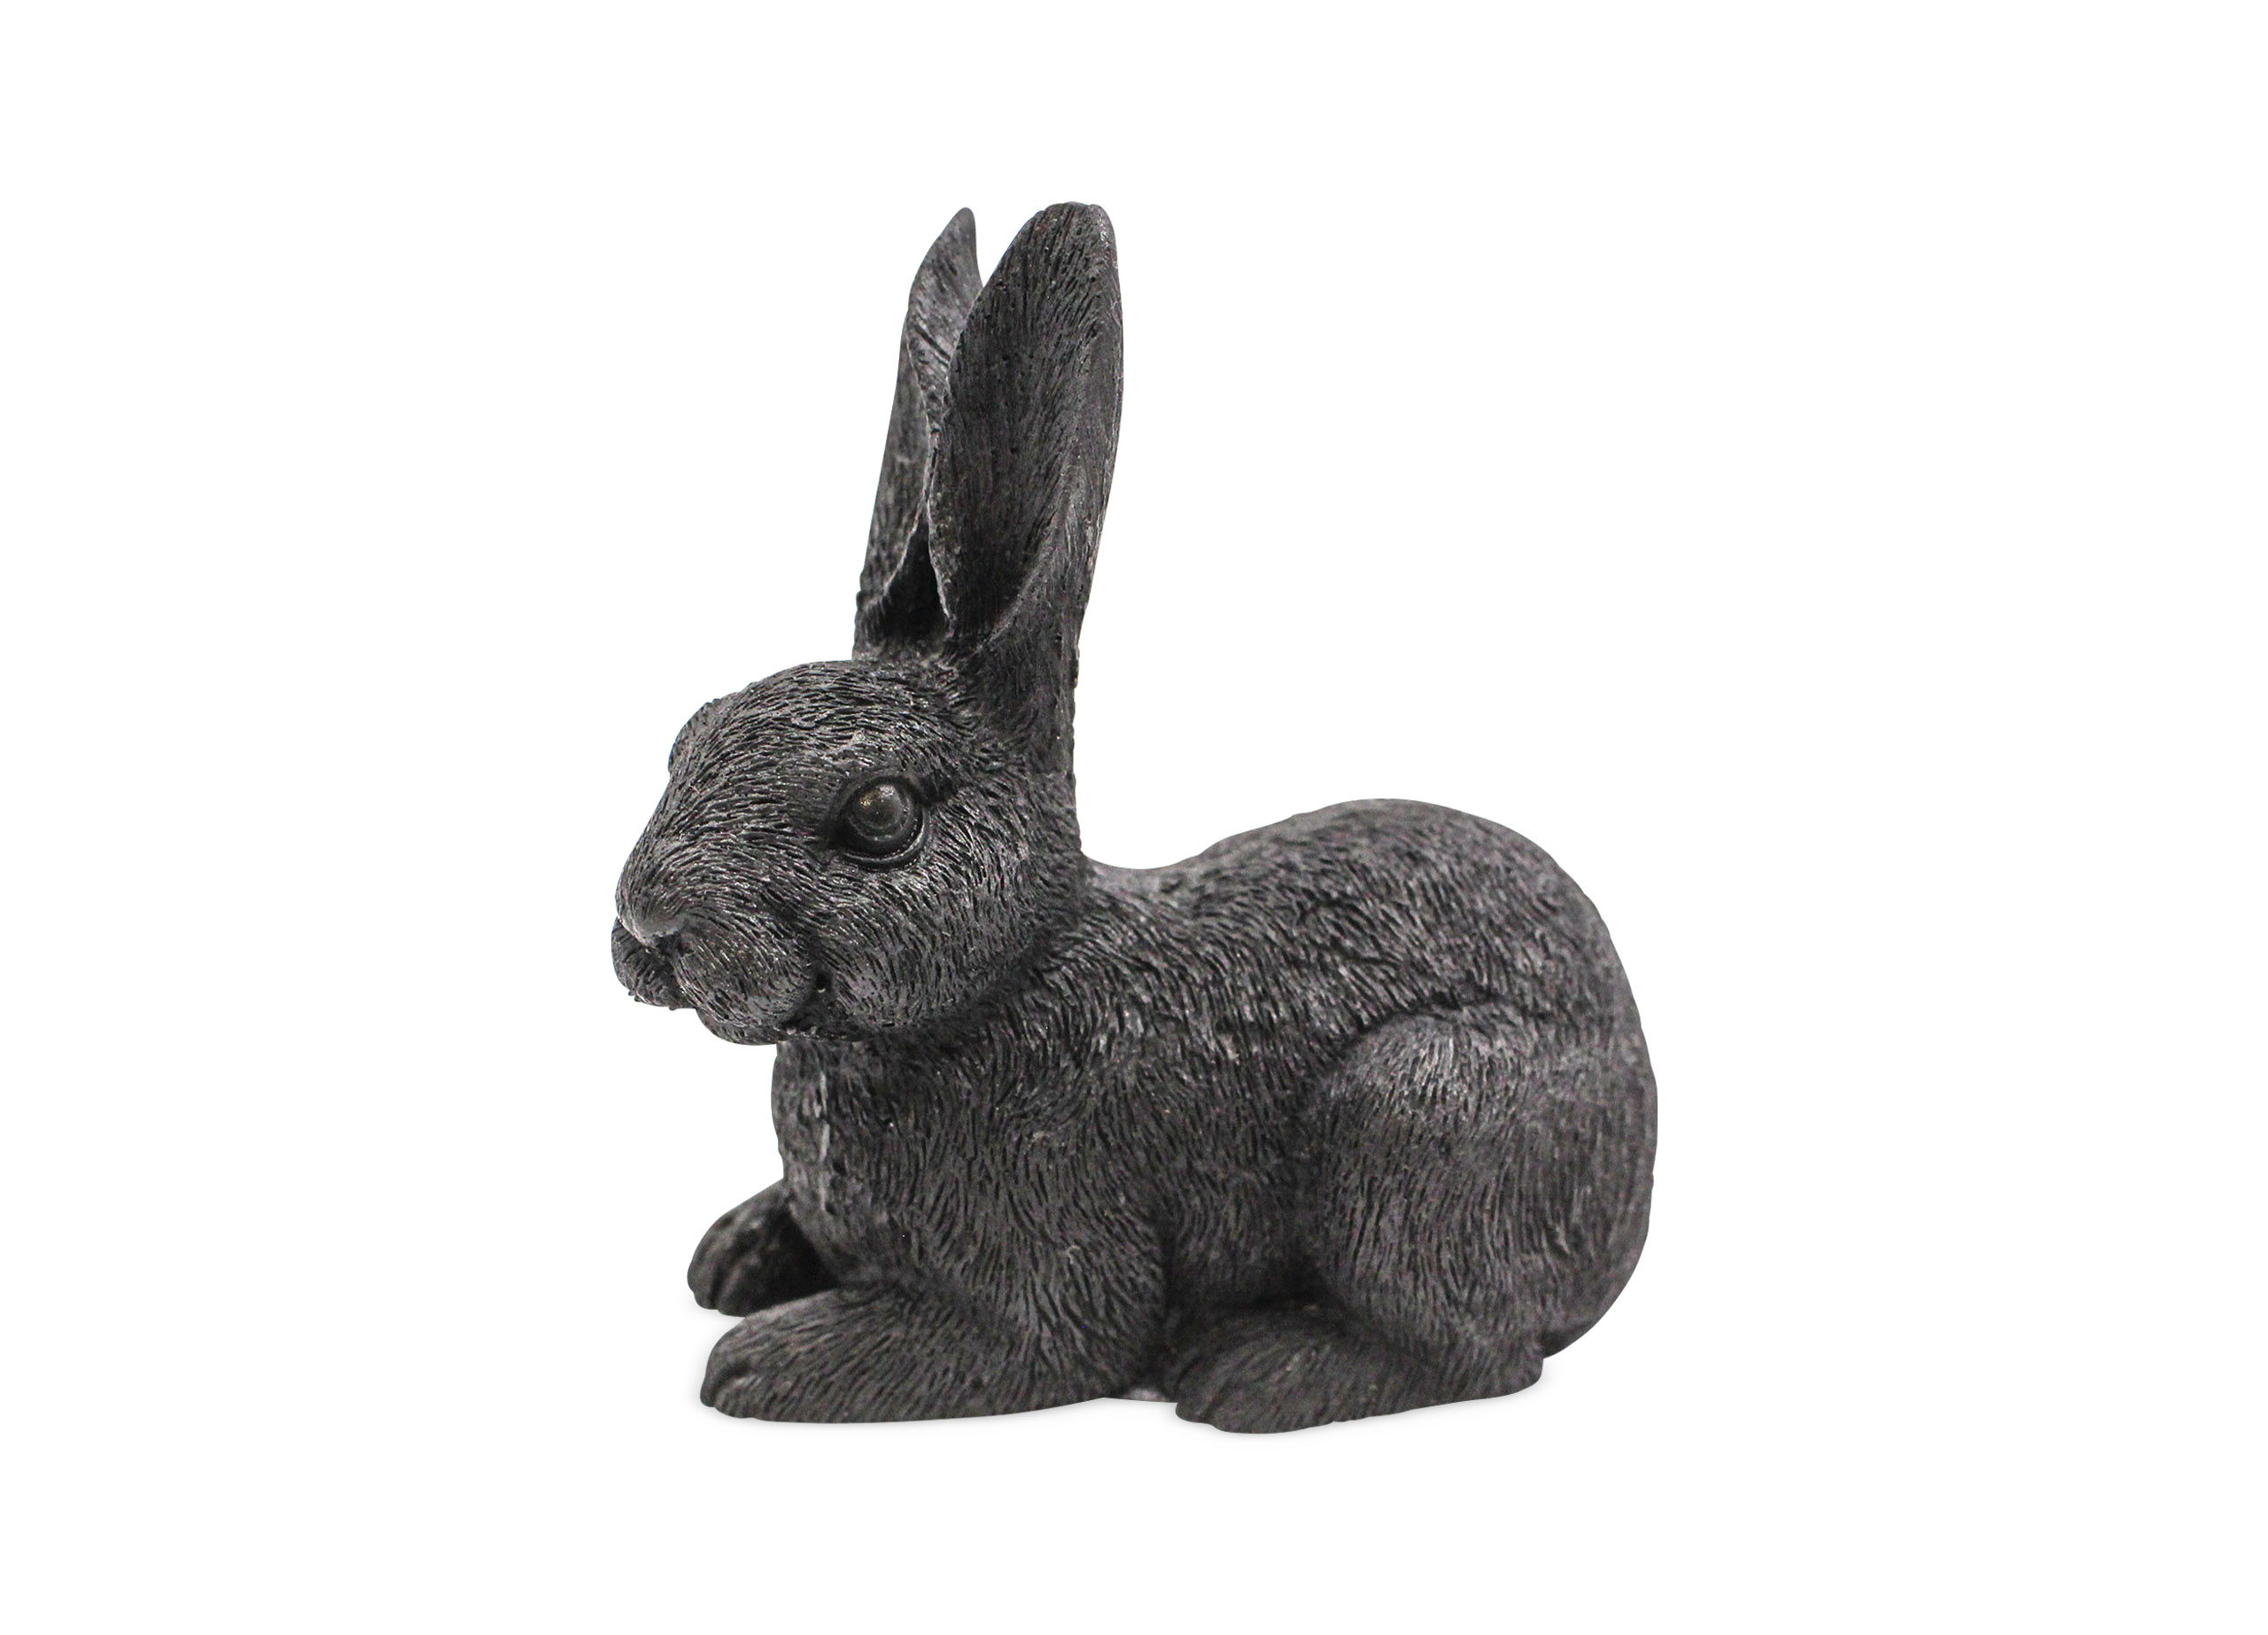 Shungite Rabbit Figurine - Crystal Dreams